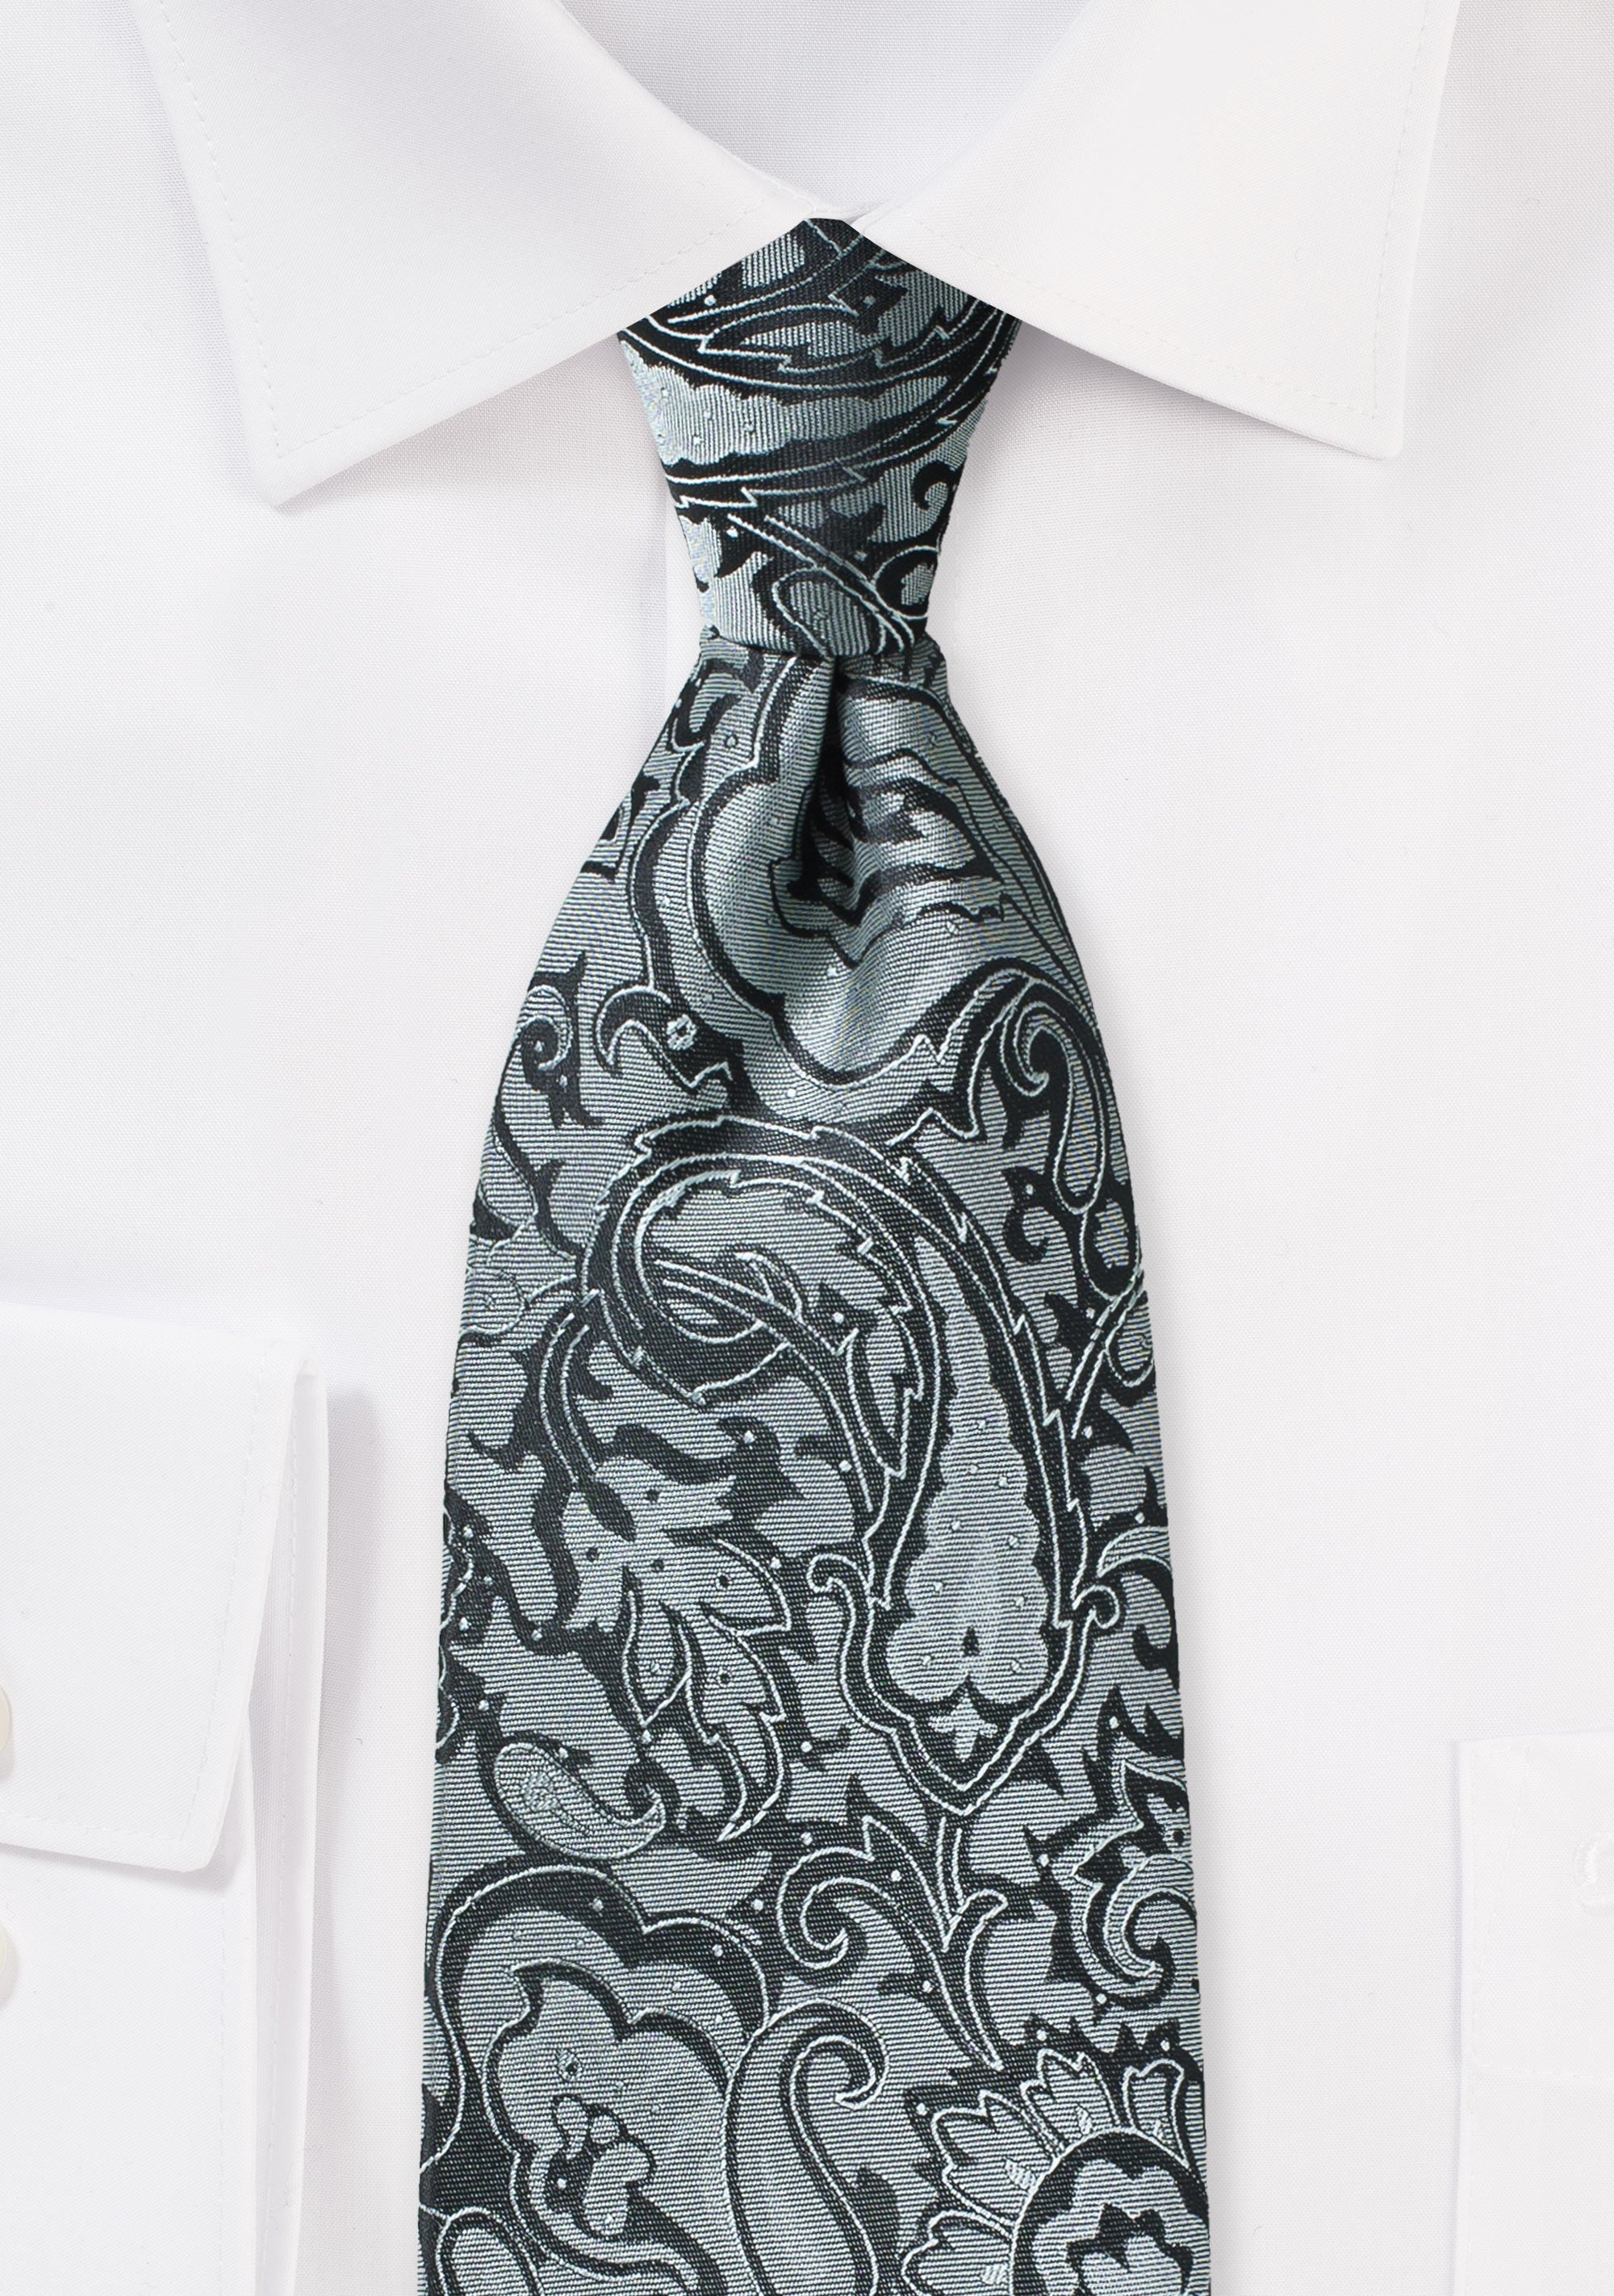 Charcoal Floral Paisley Necktie